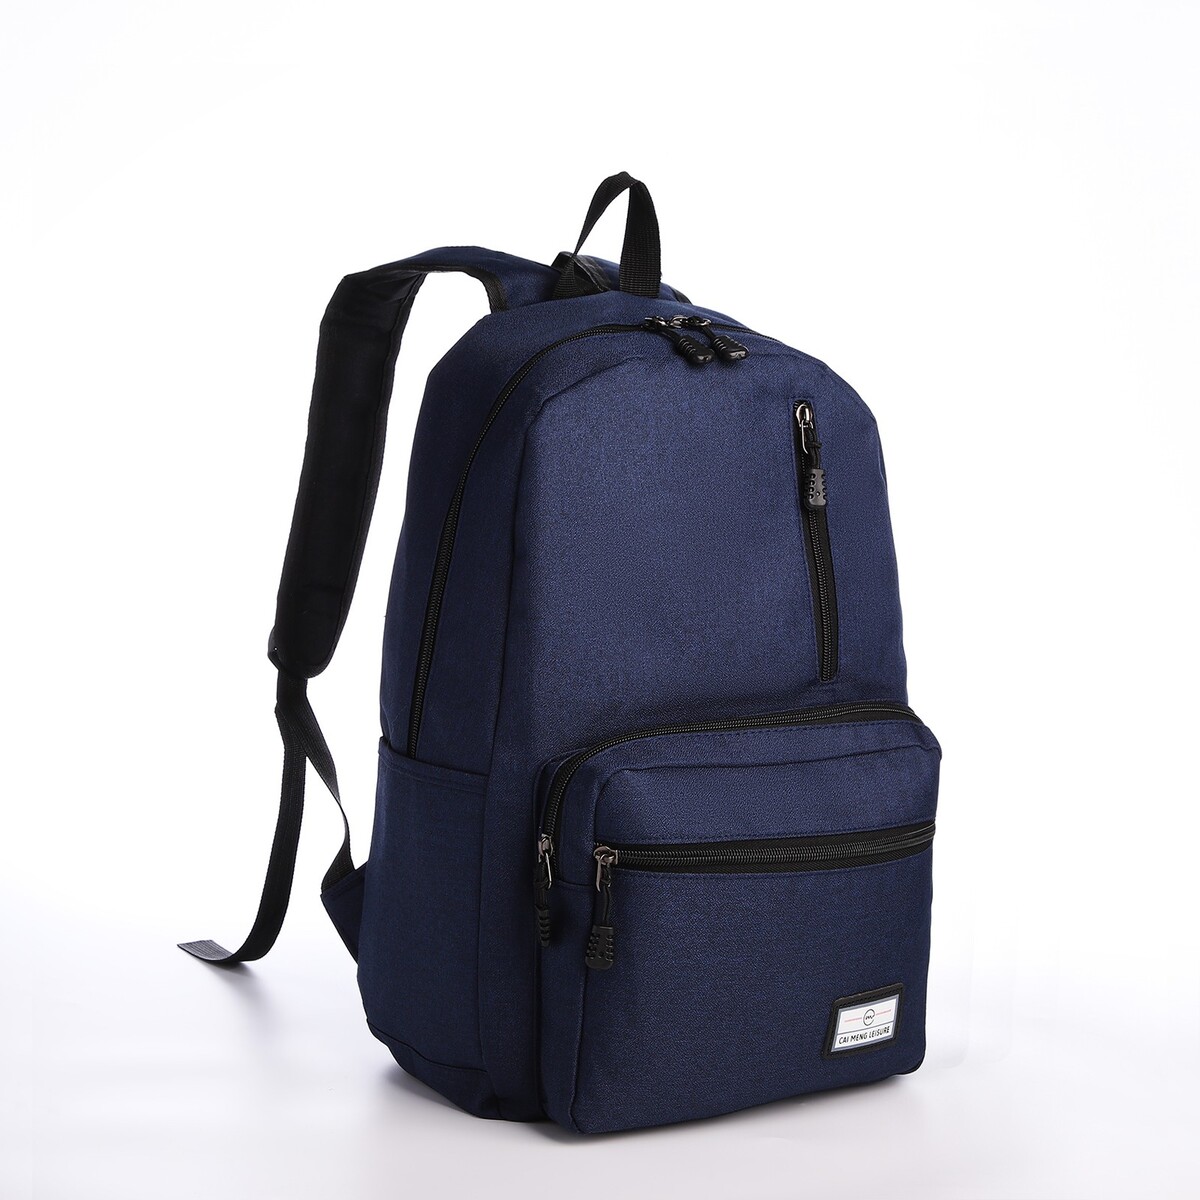 Рюкзак молодежный из текстиля на молнии, 5 карманов, usb, цвет синий рюкзак молодежный из текстиля 5 карманов синий